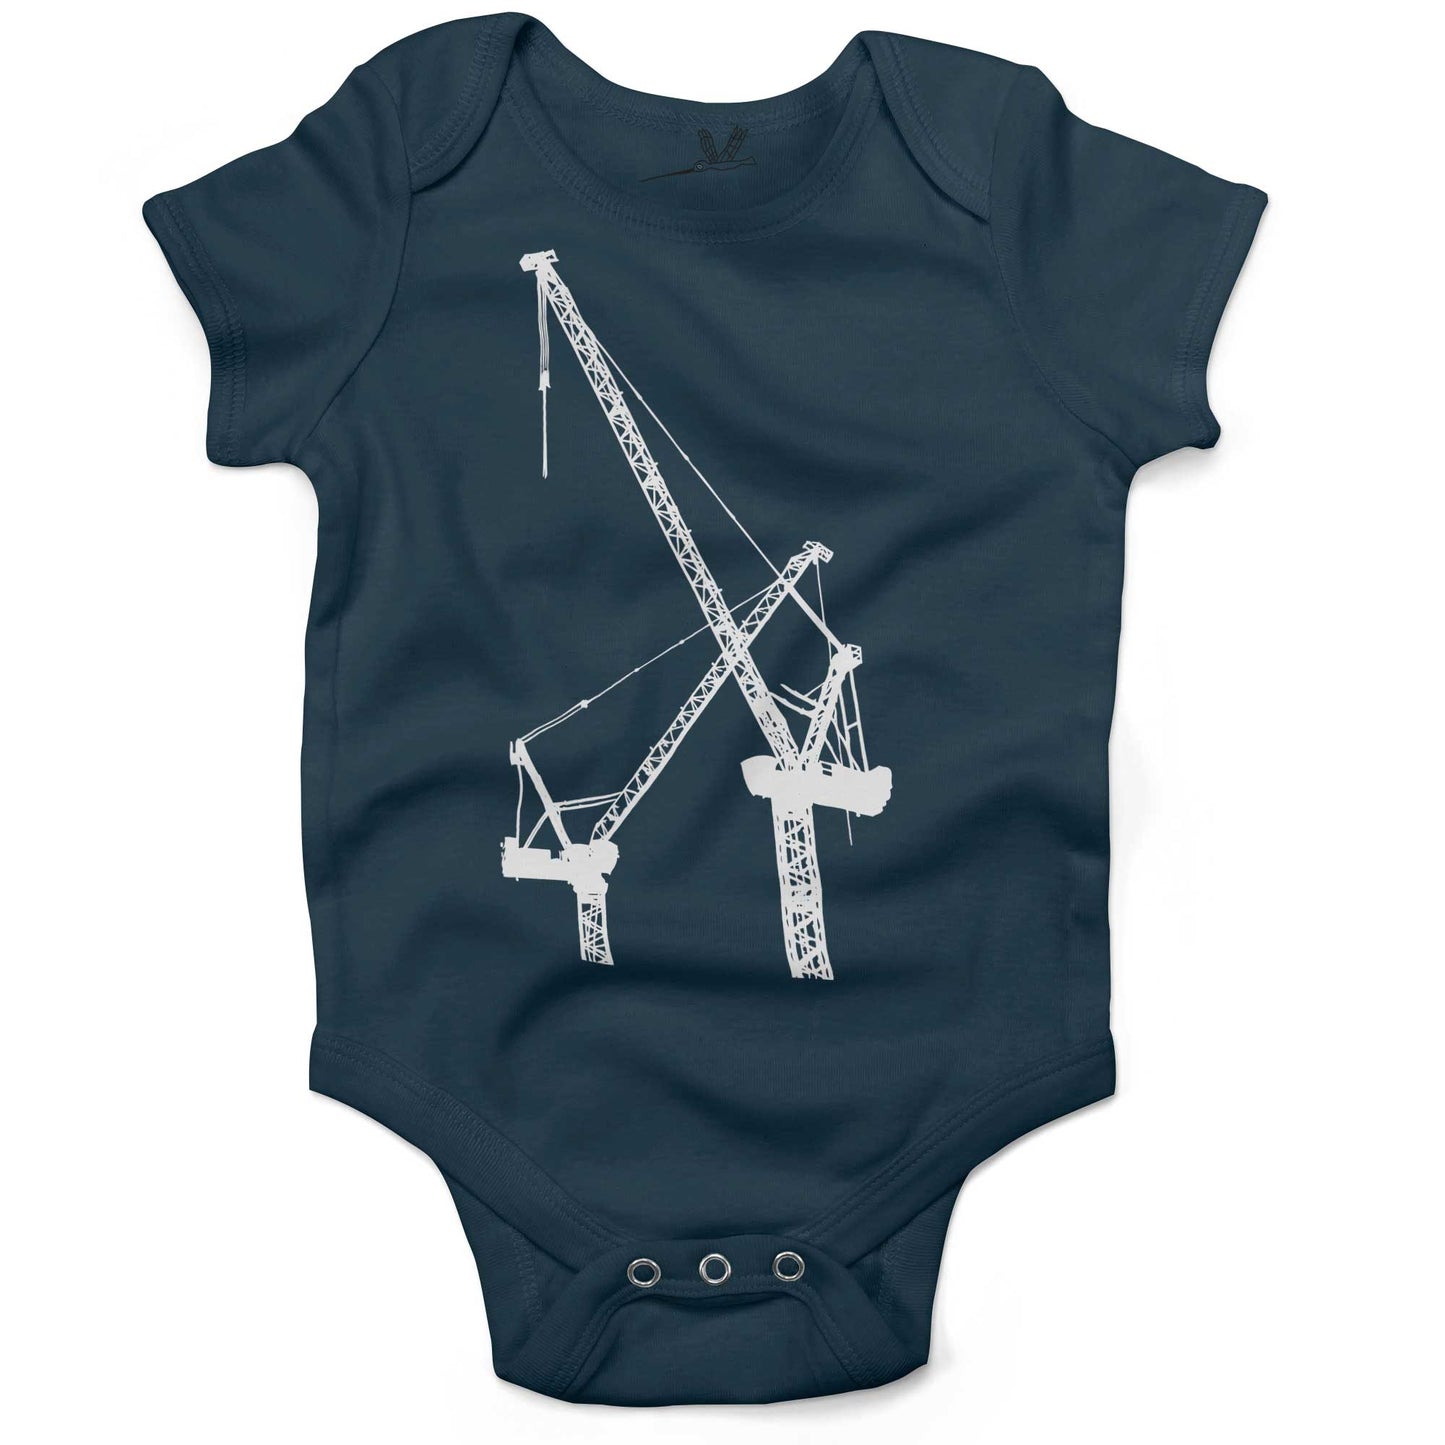 Construction Cranes Infant Bodysuit or Raglan Tee-Organic Pacific Blue-3-6 months